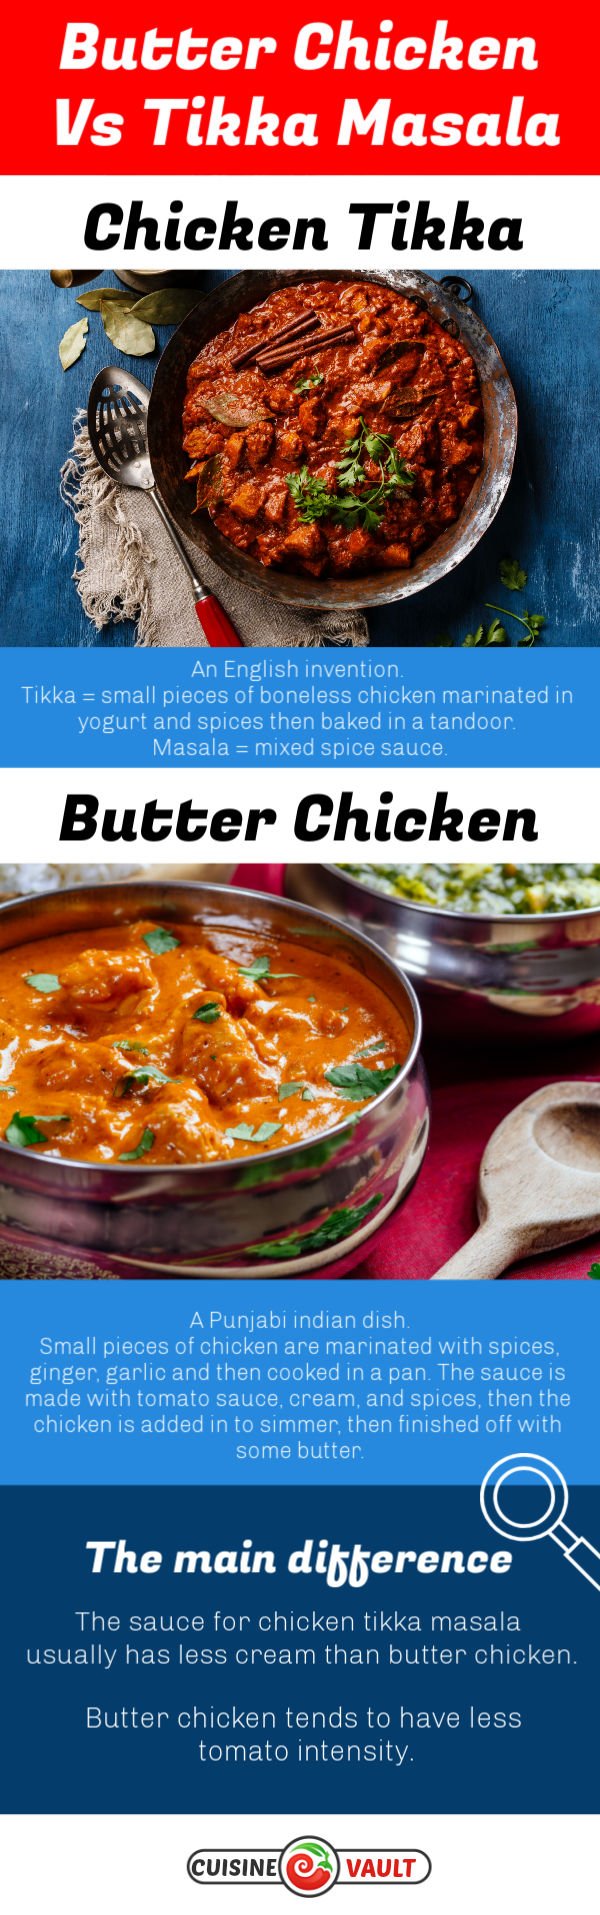 Butter chicken vs chicken tikka masala infographic